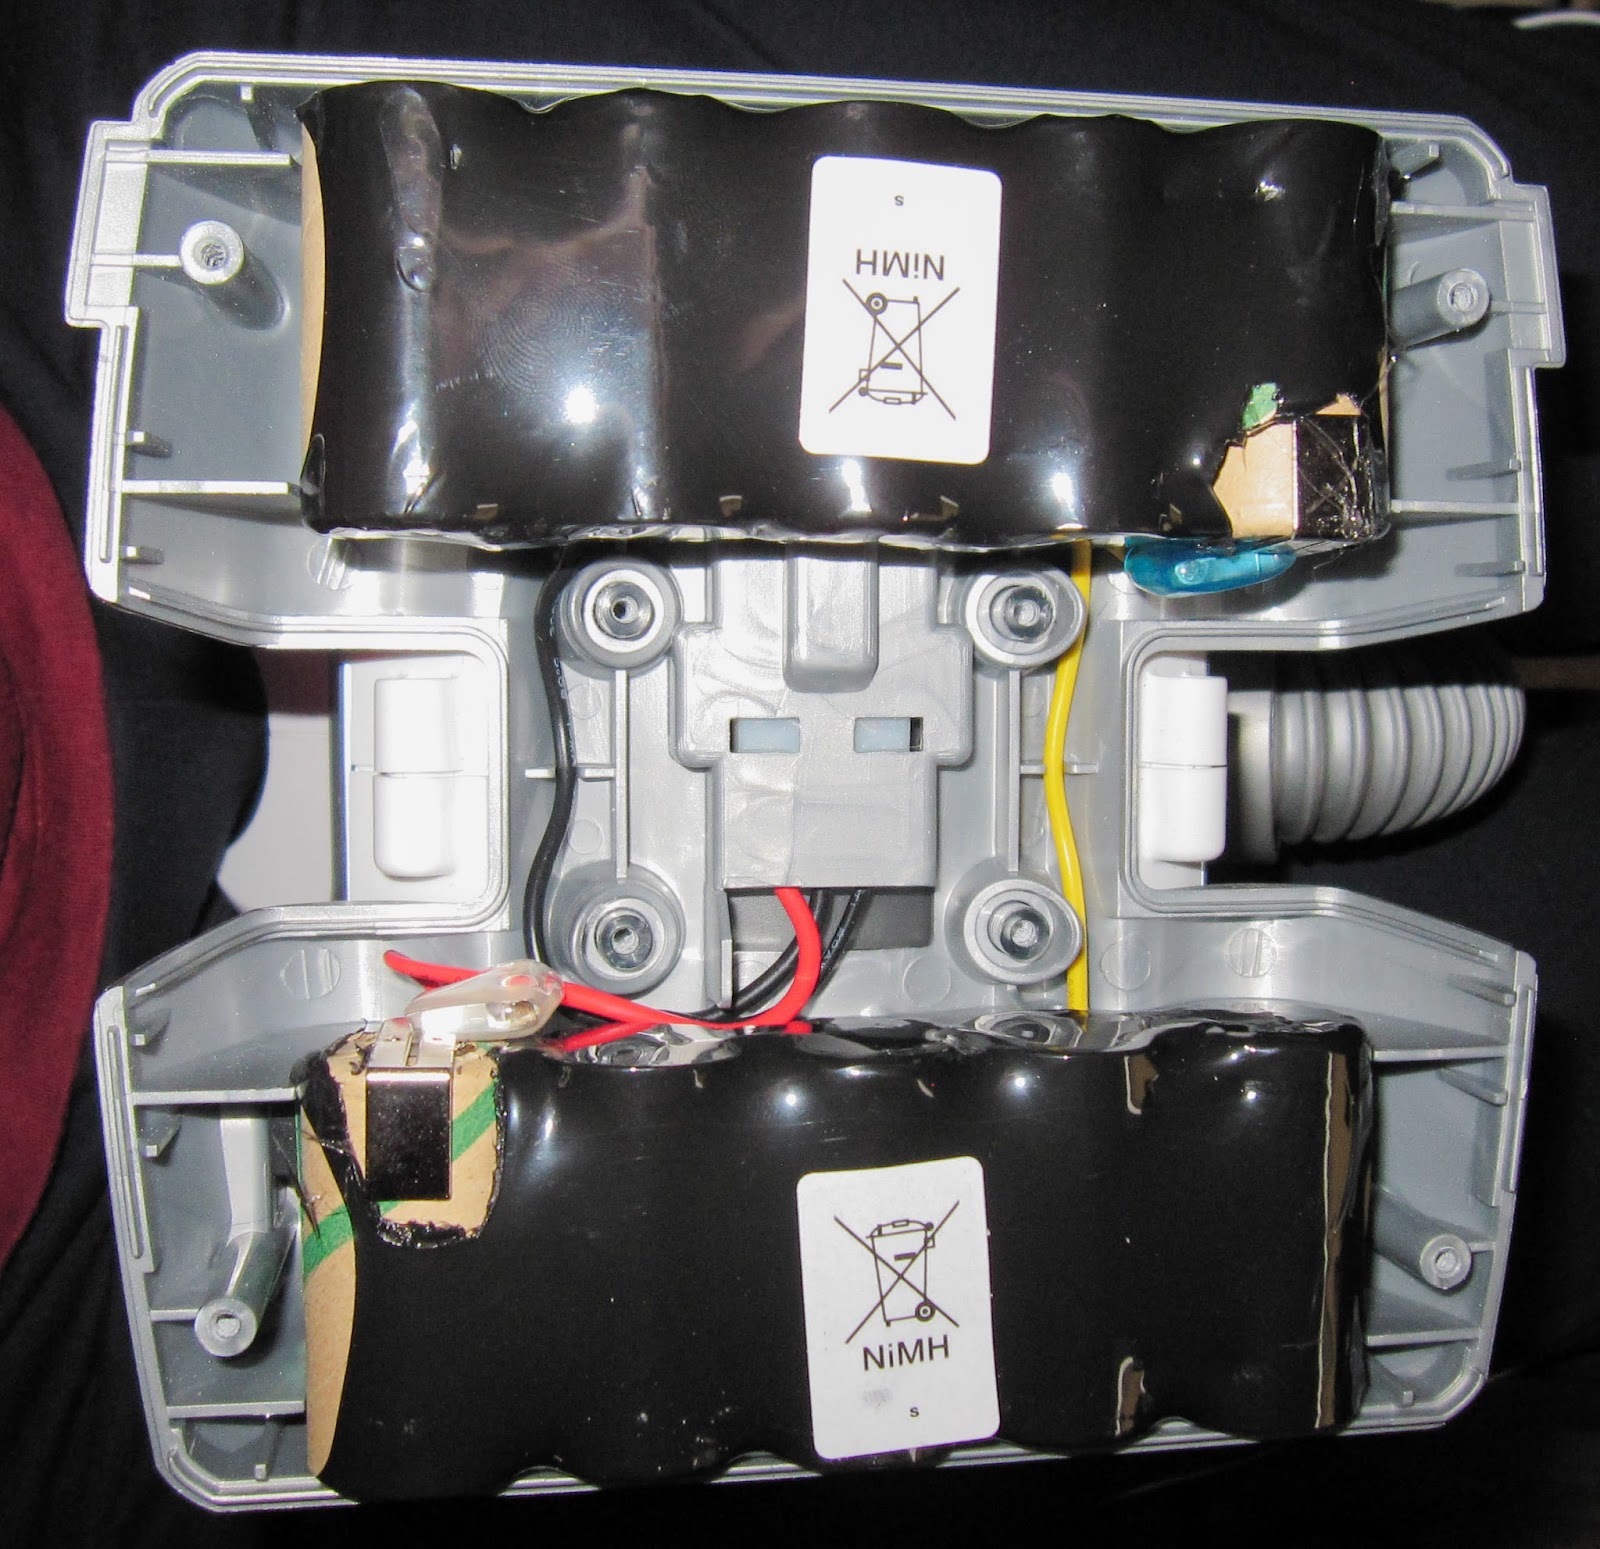 Battery for Black&Decker Flexi PD1080 H2, PD1200 H1, Z-PD1200